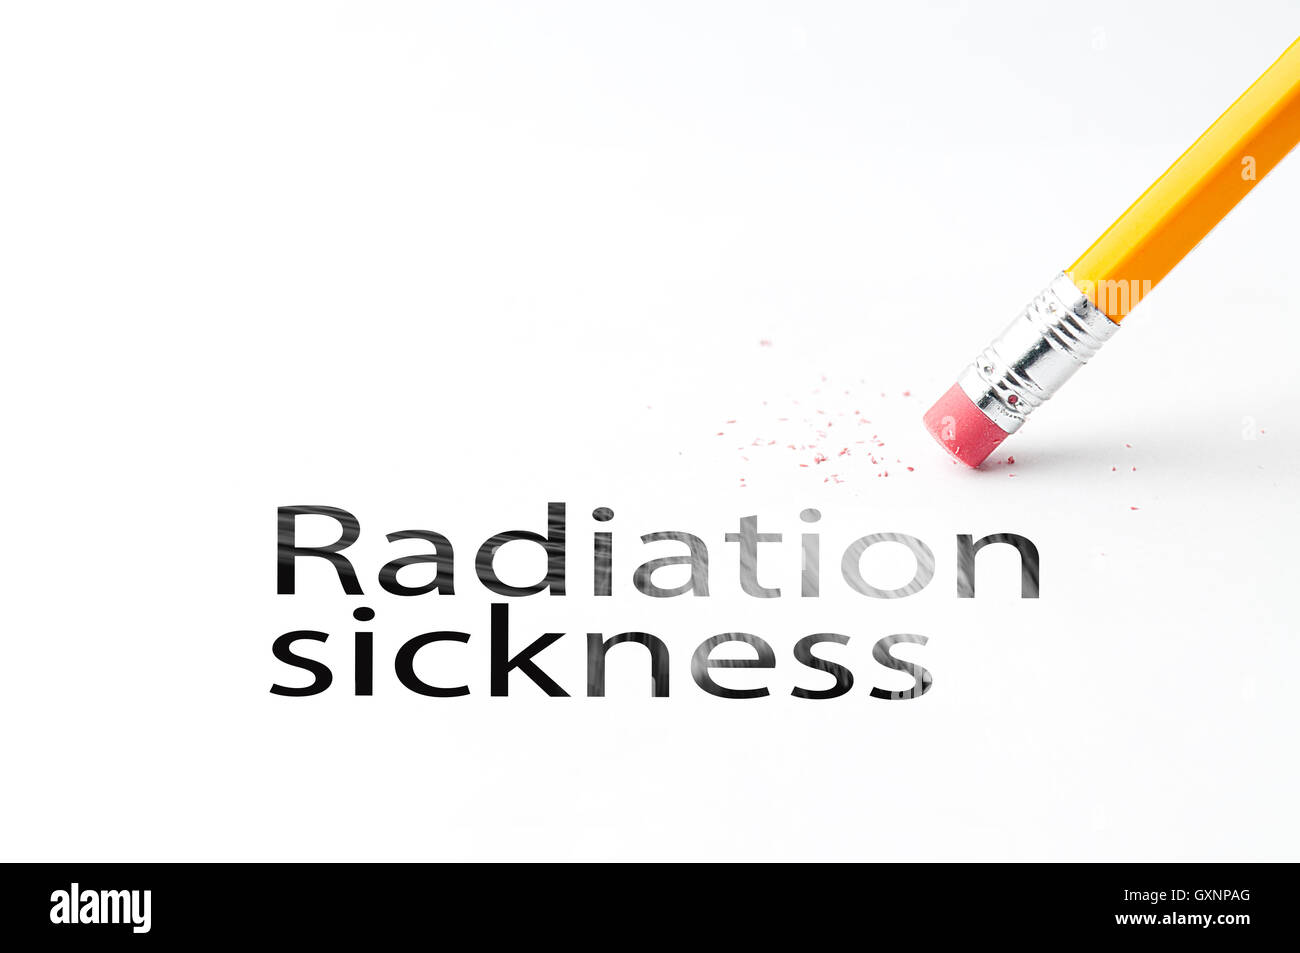 Pencil with eraser Radiation sickness Stock Photo